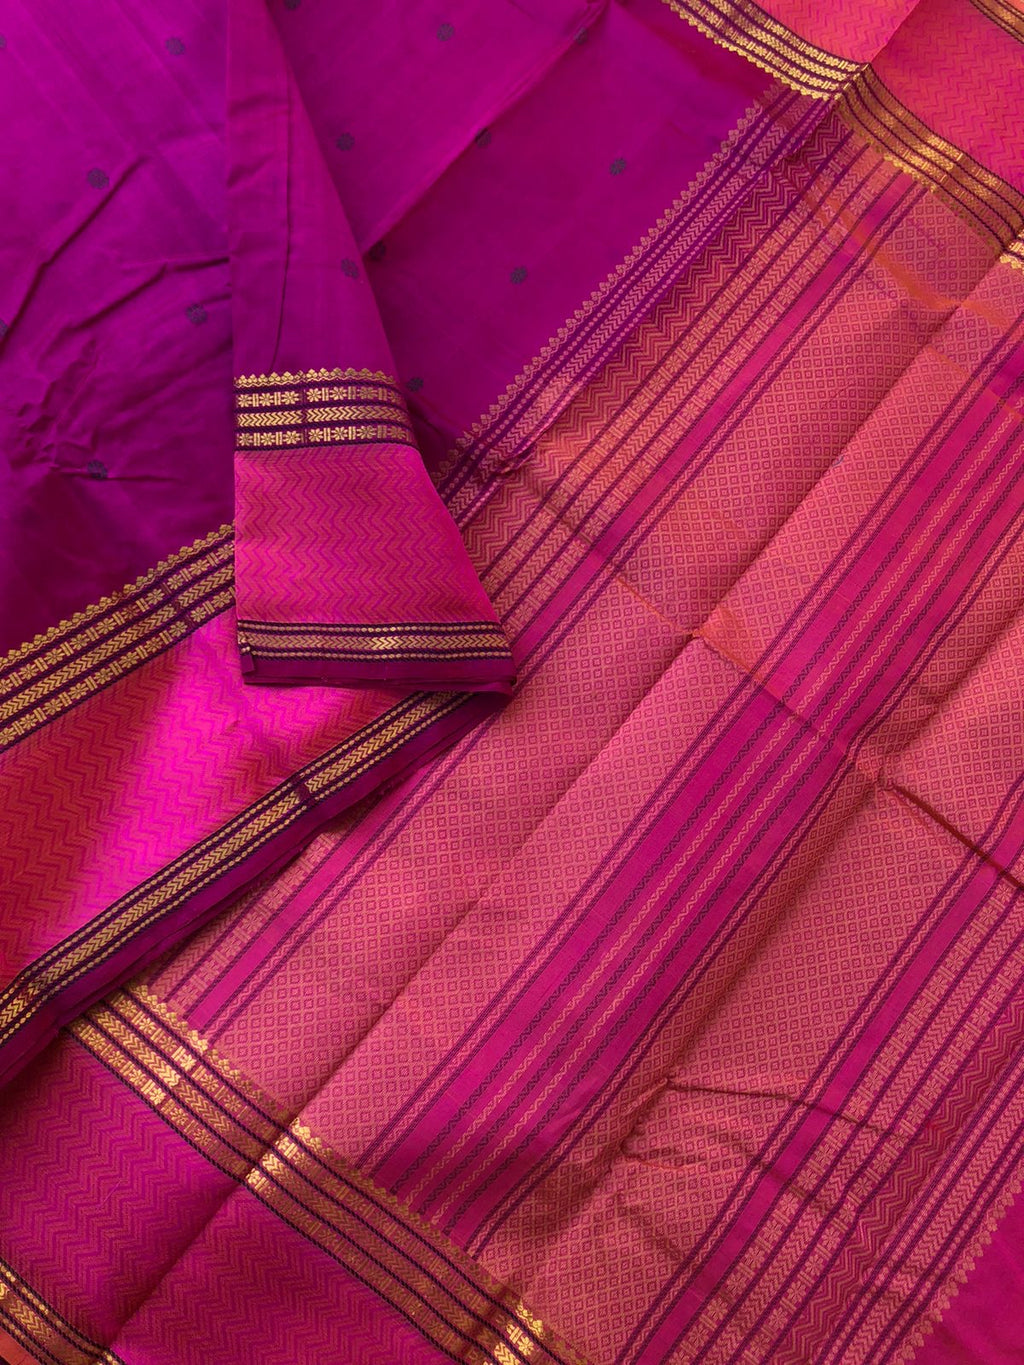 Woven Motifs Silk Cotton - deep dark pink on pink